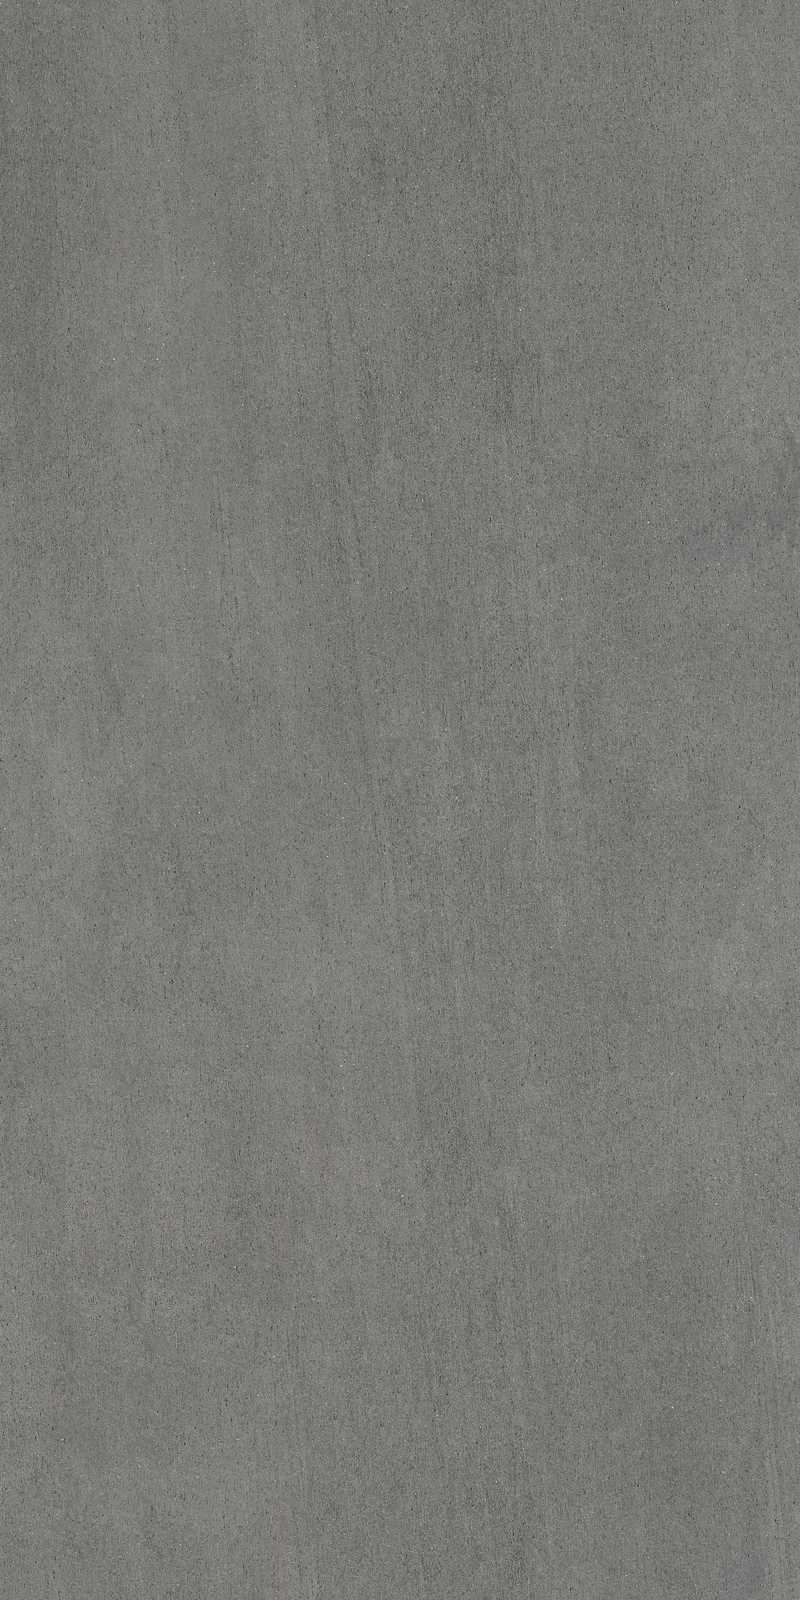 Керамогранит Плитка из керамогранита Marazzi Italy Grande Stone Look 162x324 серый (M38V) / коллекция Marazzi Italy / производитель Marazzi Italy / страна Италия